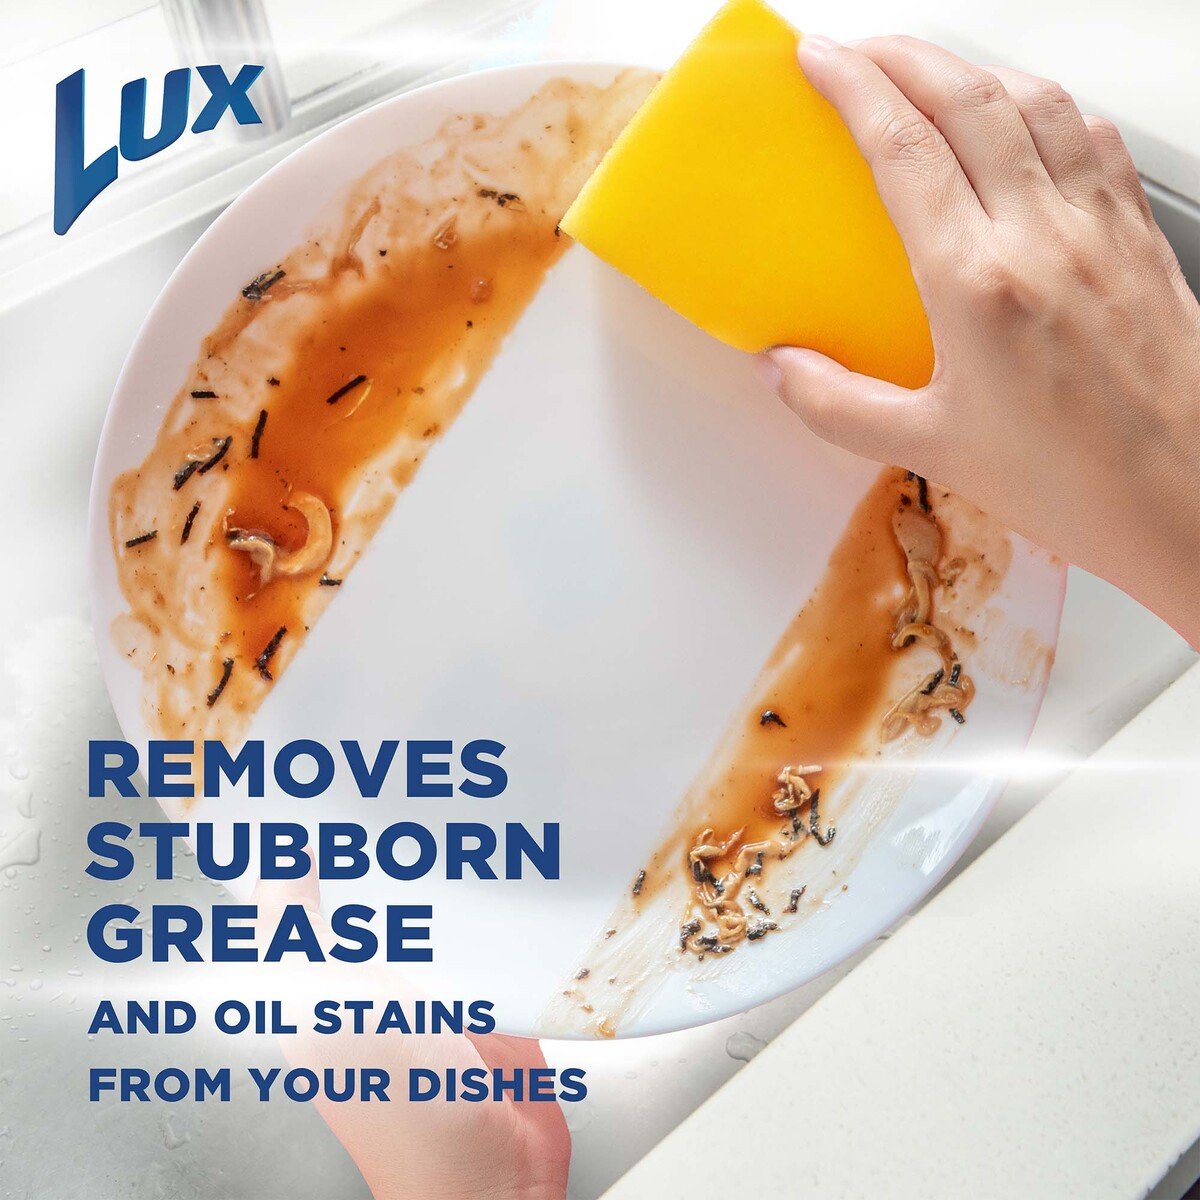 Lulu Lemon Dish Wash Liquid 4 x 420ml - Cleaning & Household